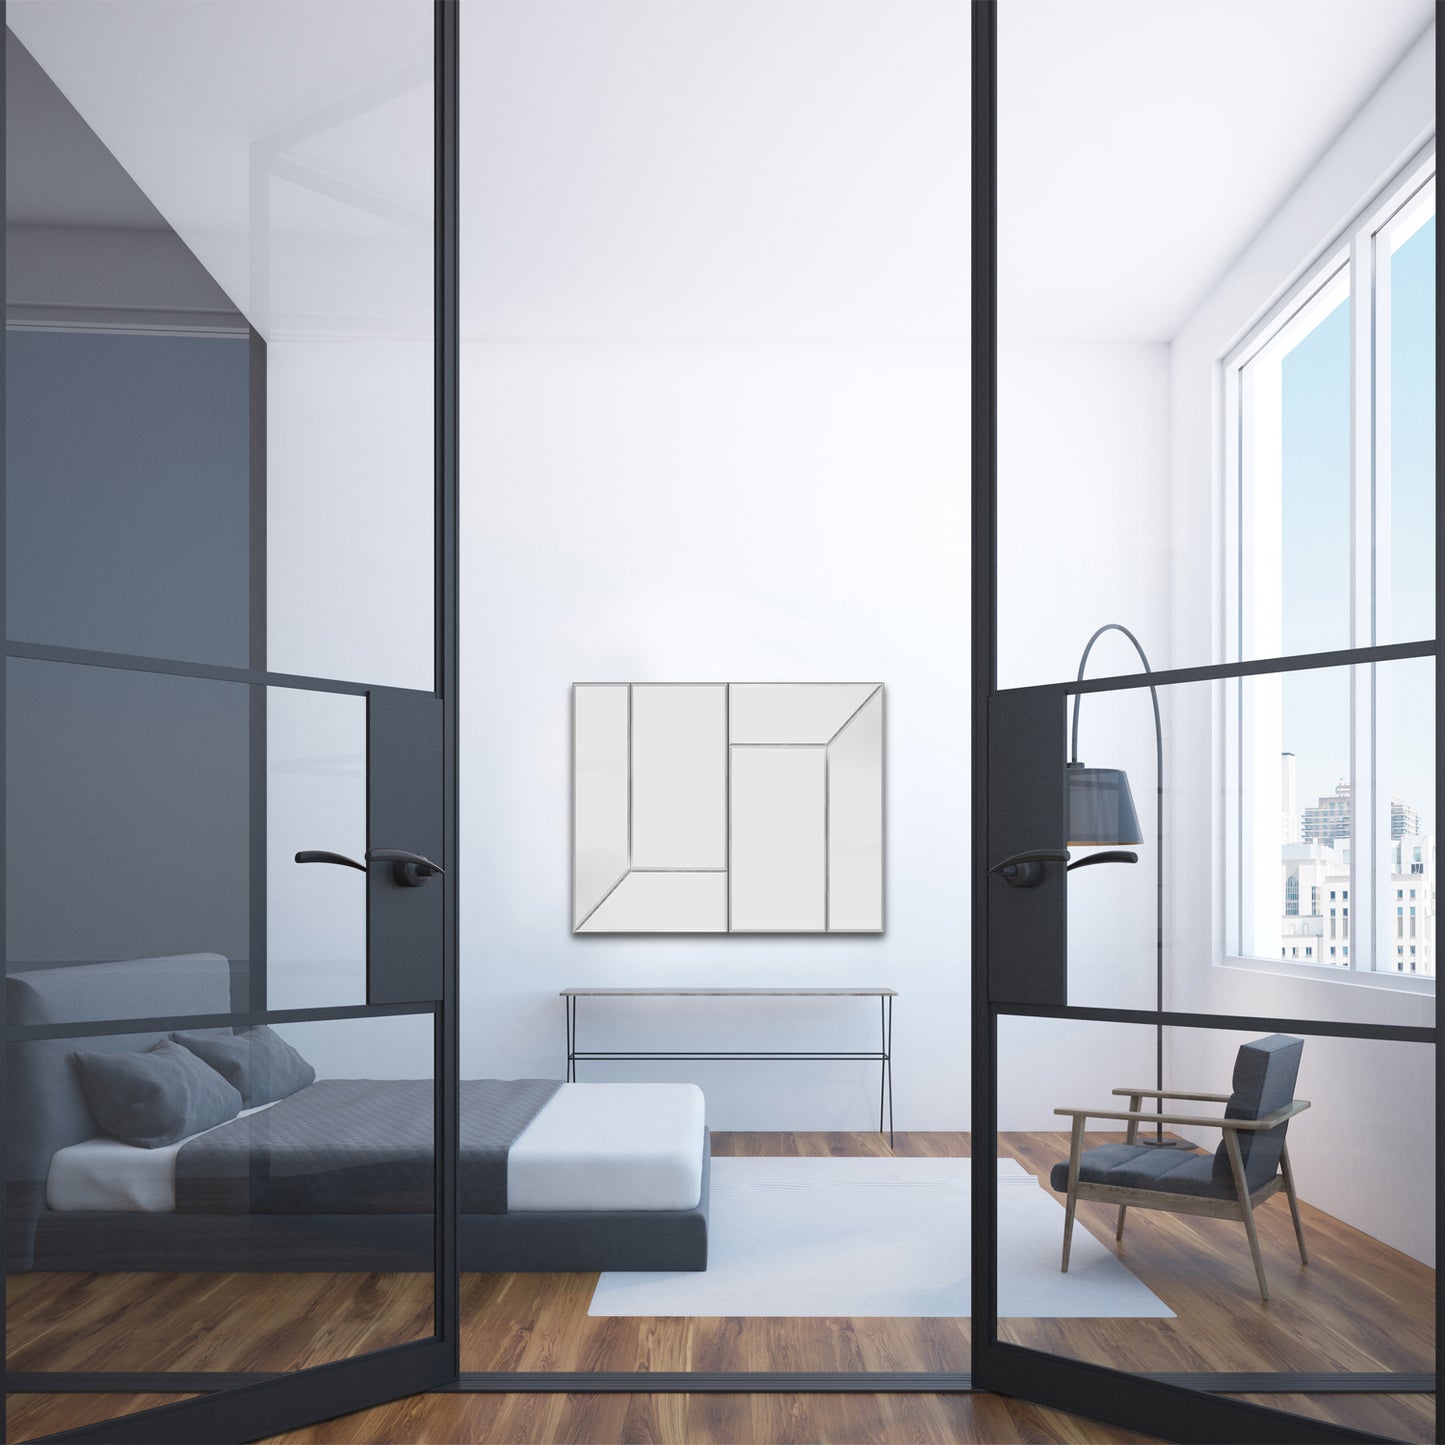 Reversible Rectangle XL - Mirror - Reversible - Beveled Mirror - Contemporary Wall Art